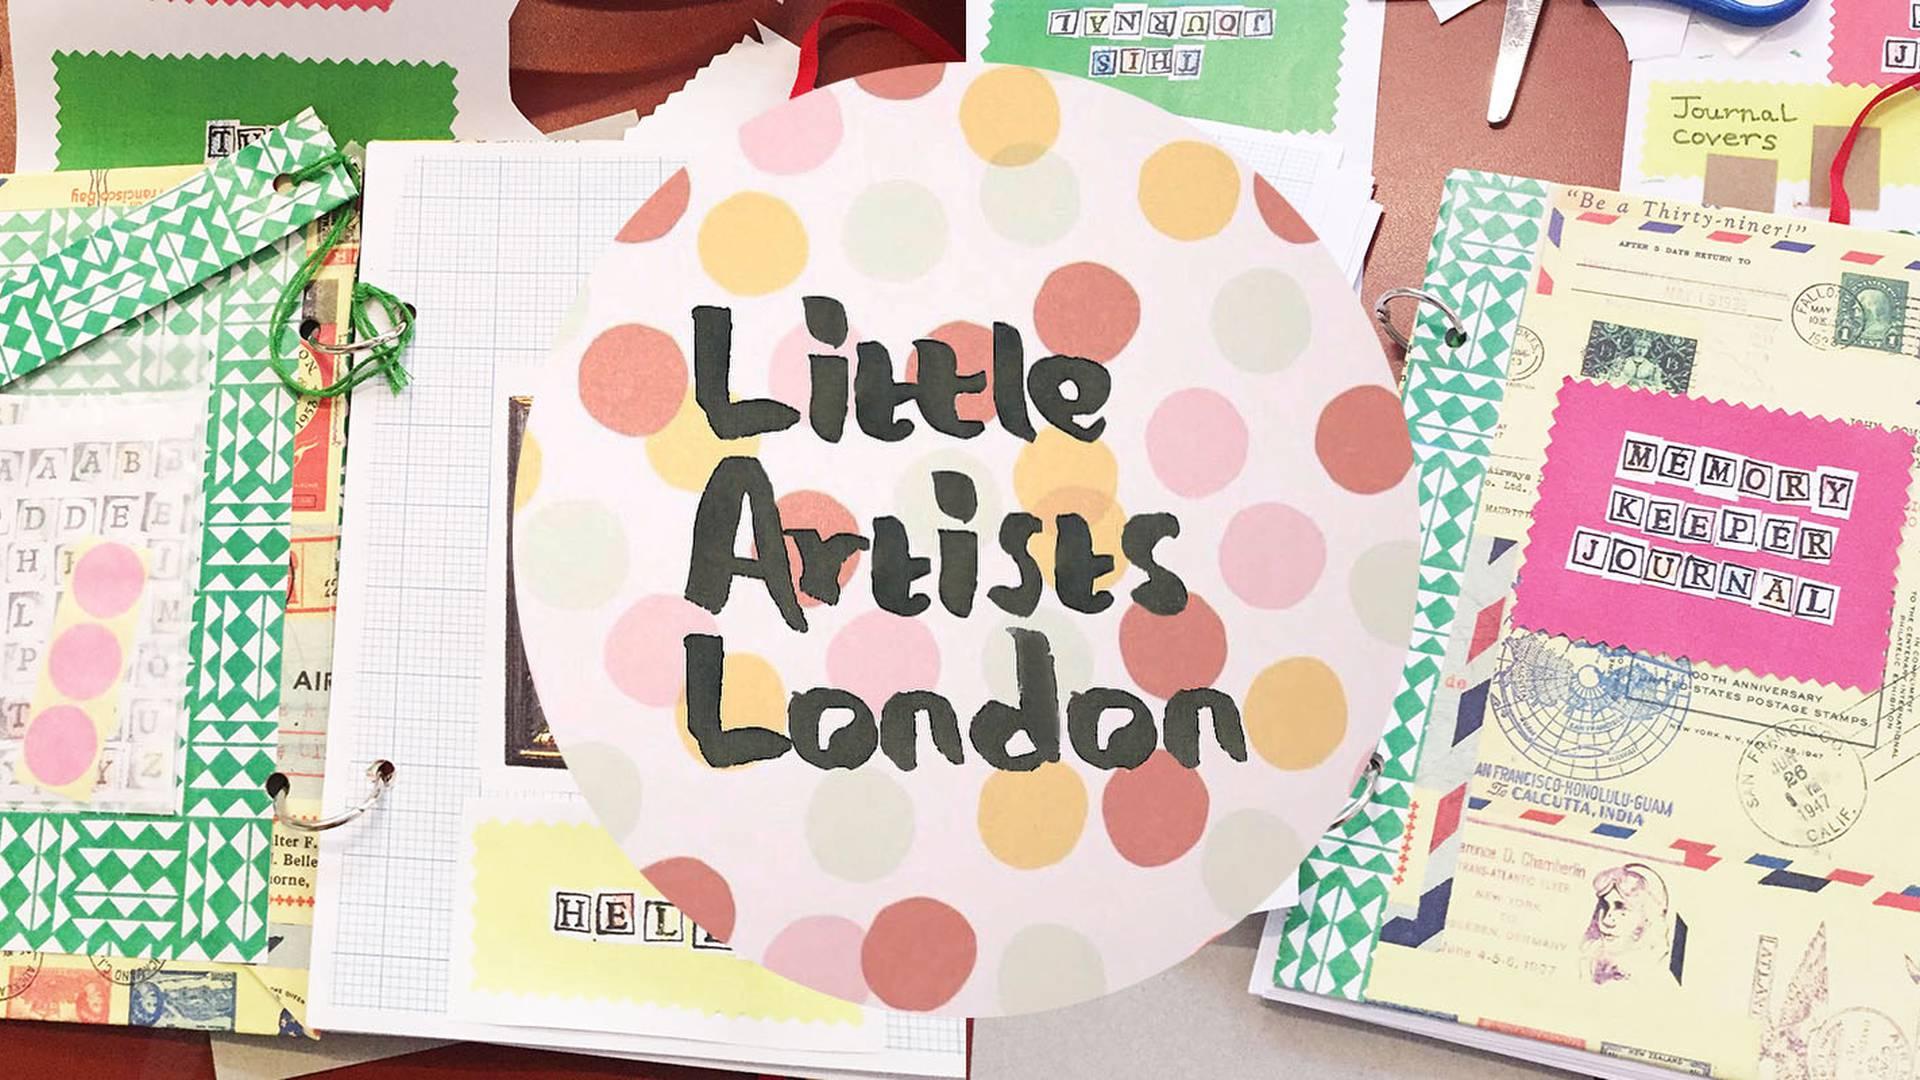 Little Artists London photo